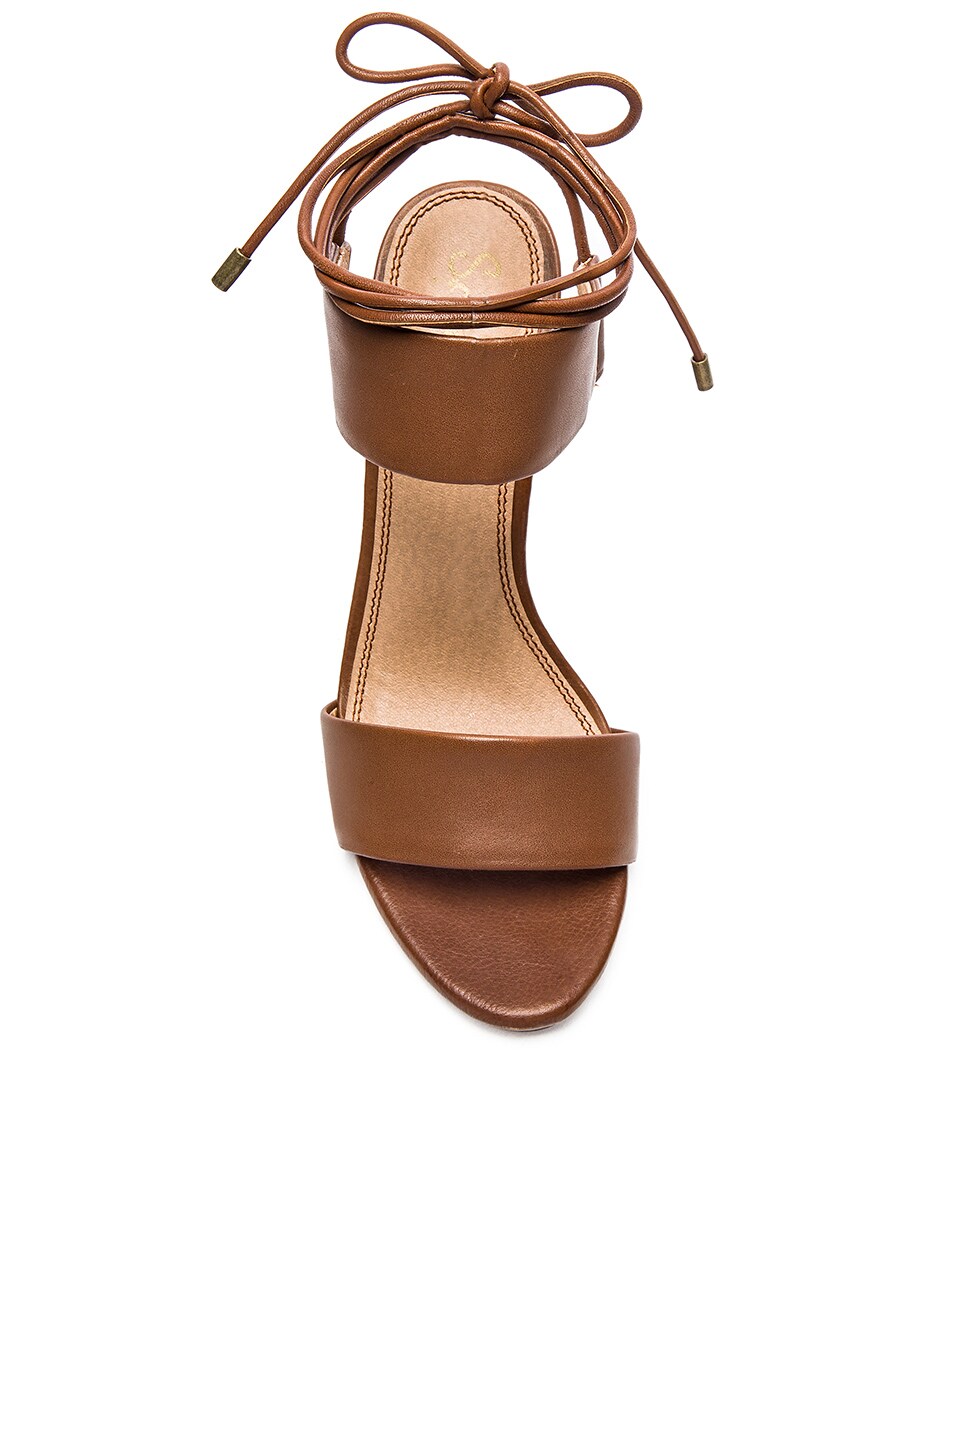 Splendid Kenya Heel in Cognac Leather | REVOLVE